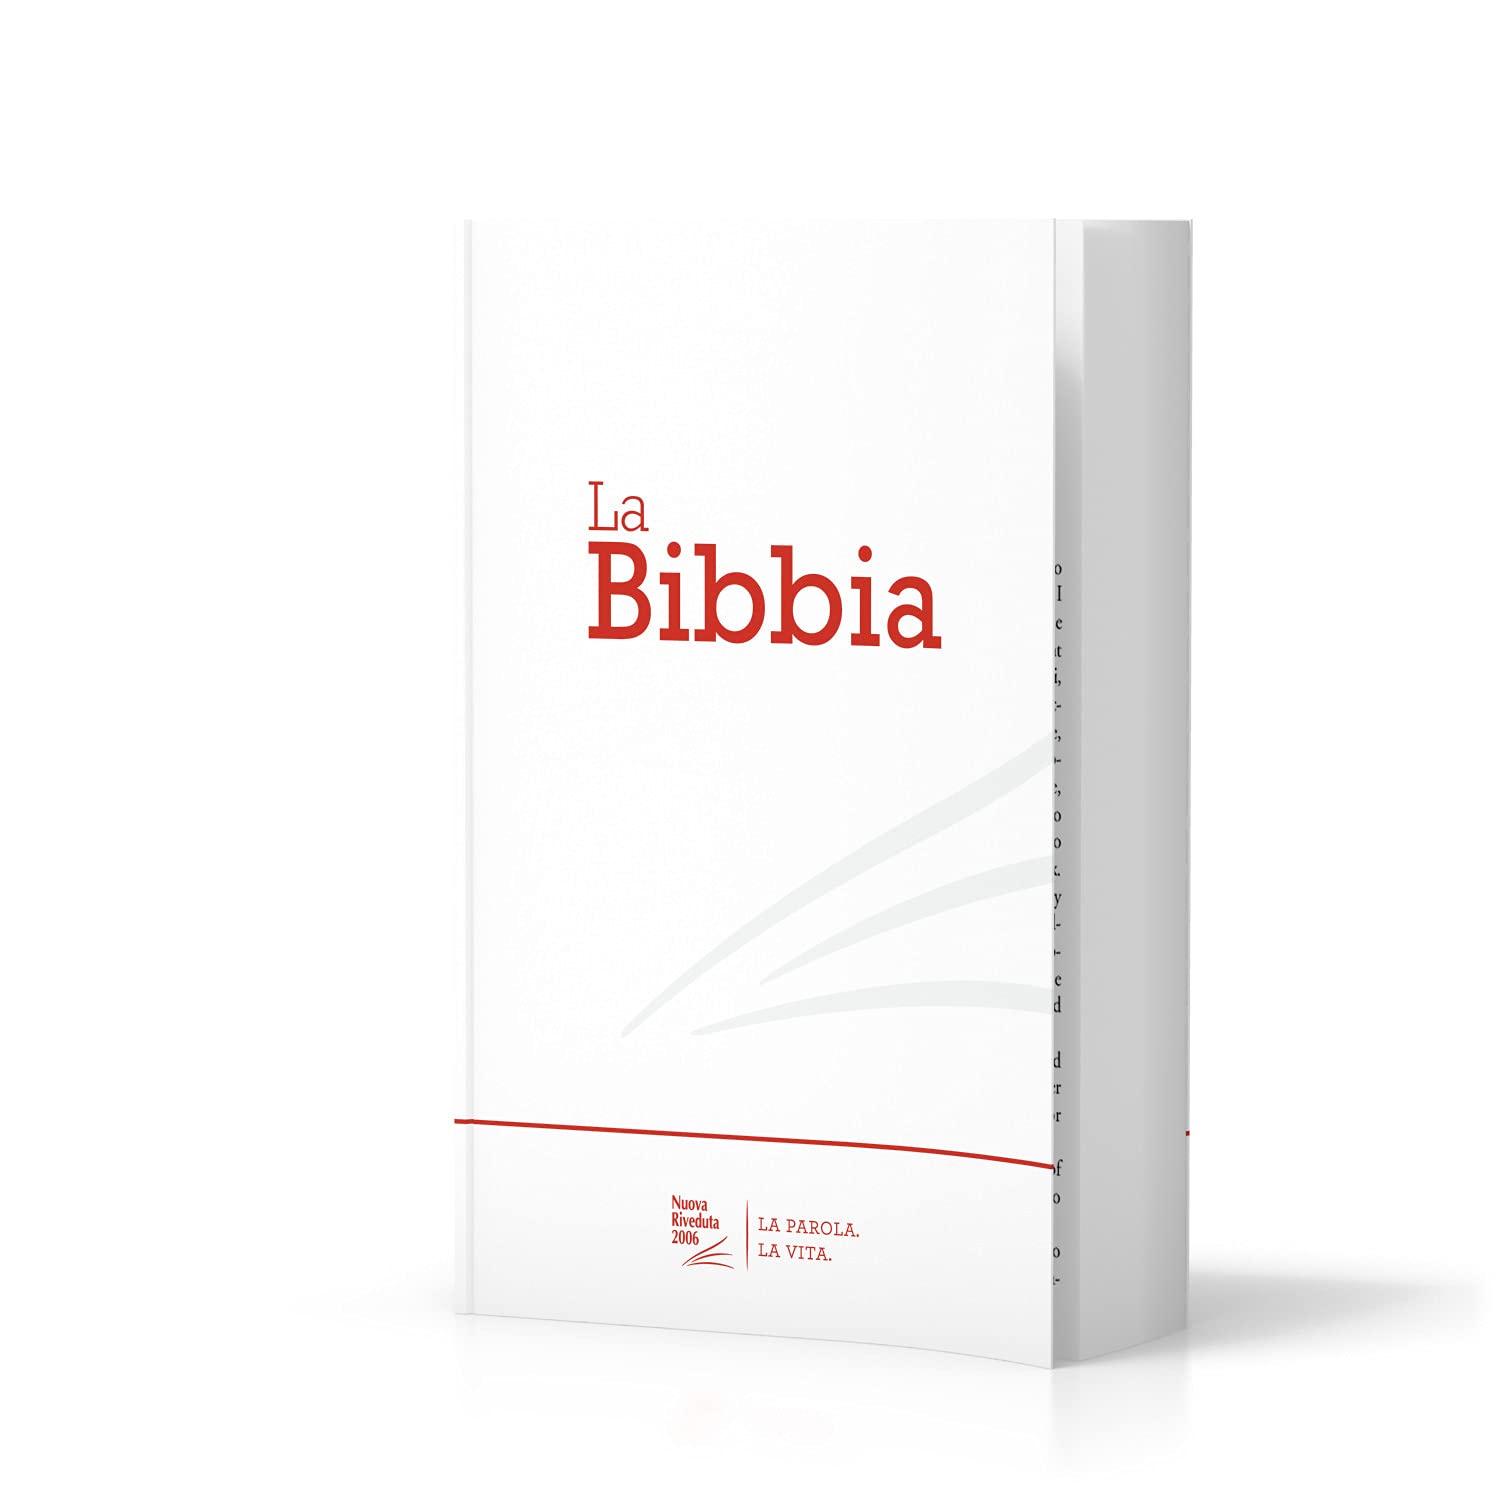 Bibbia Nuova Riveduta: copertina in brossura illustrata